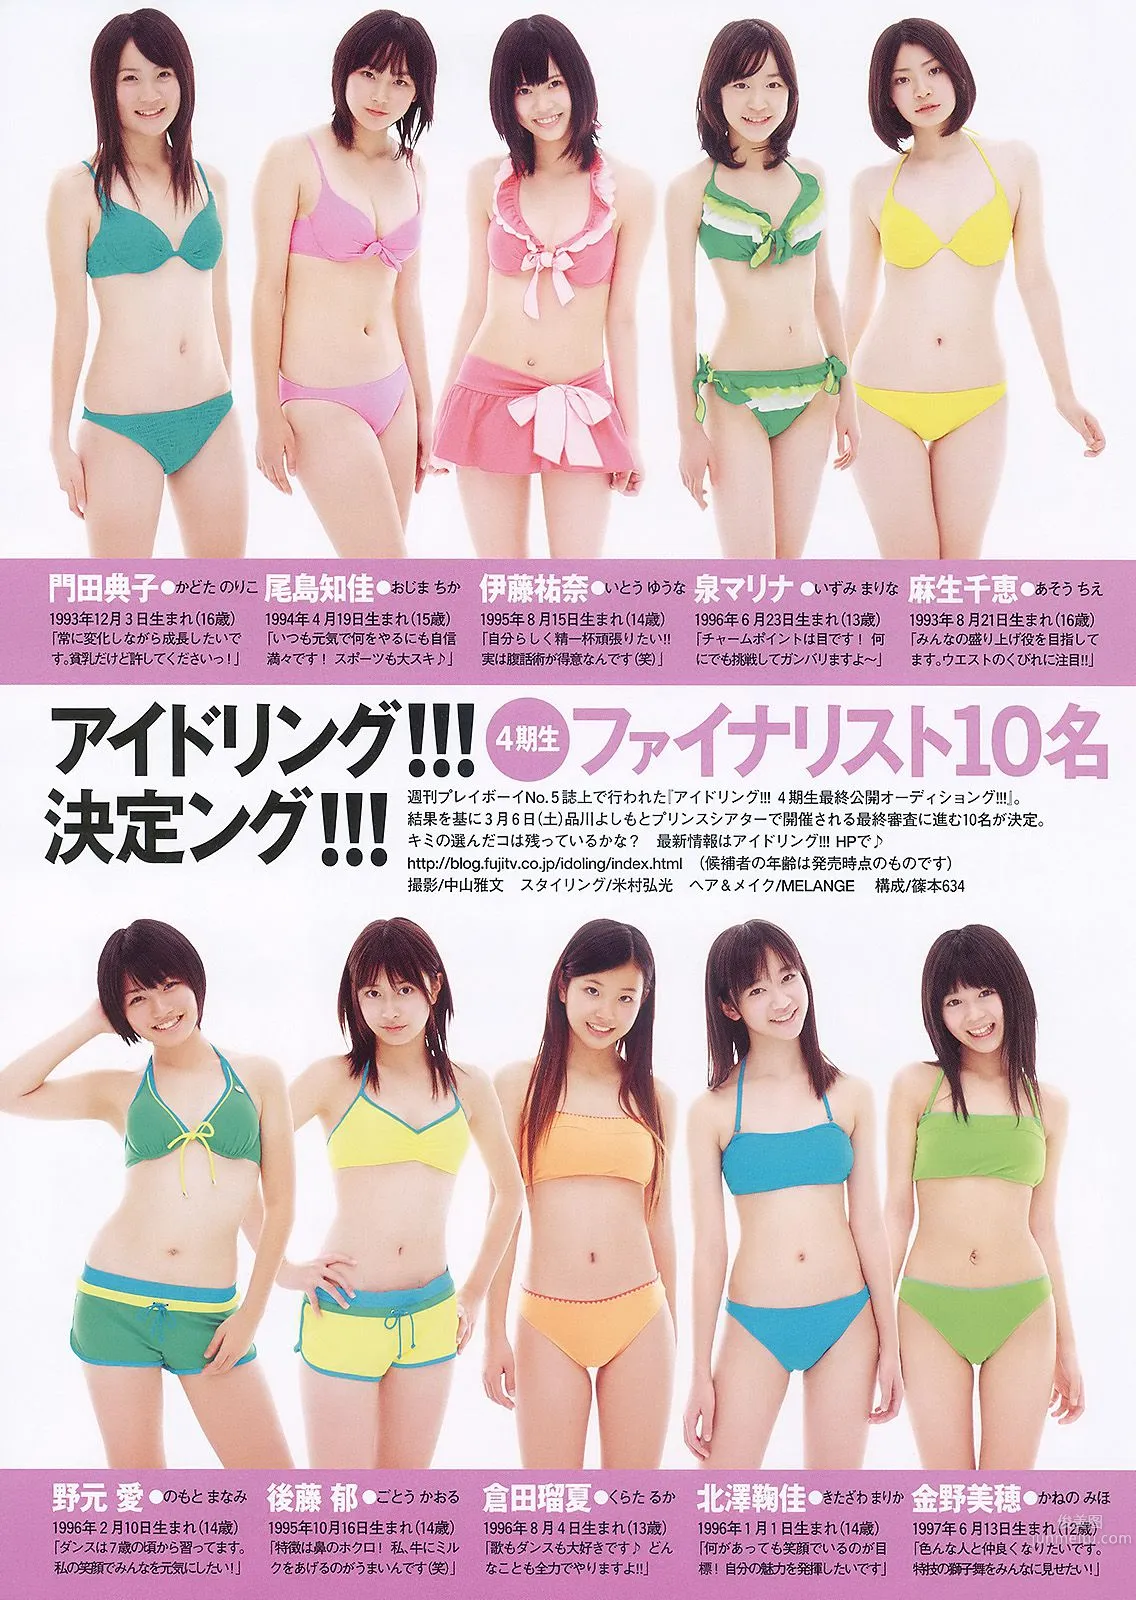 前田敦子 秋山莉奈 エリナ 佐藤寛子 AKB48 [Weekly Playboy] 2010年No.10 写真杂志29